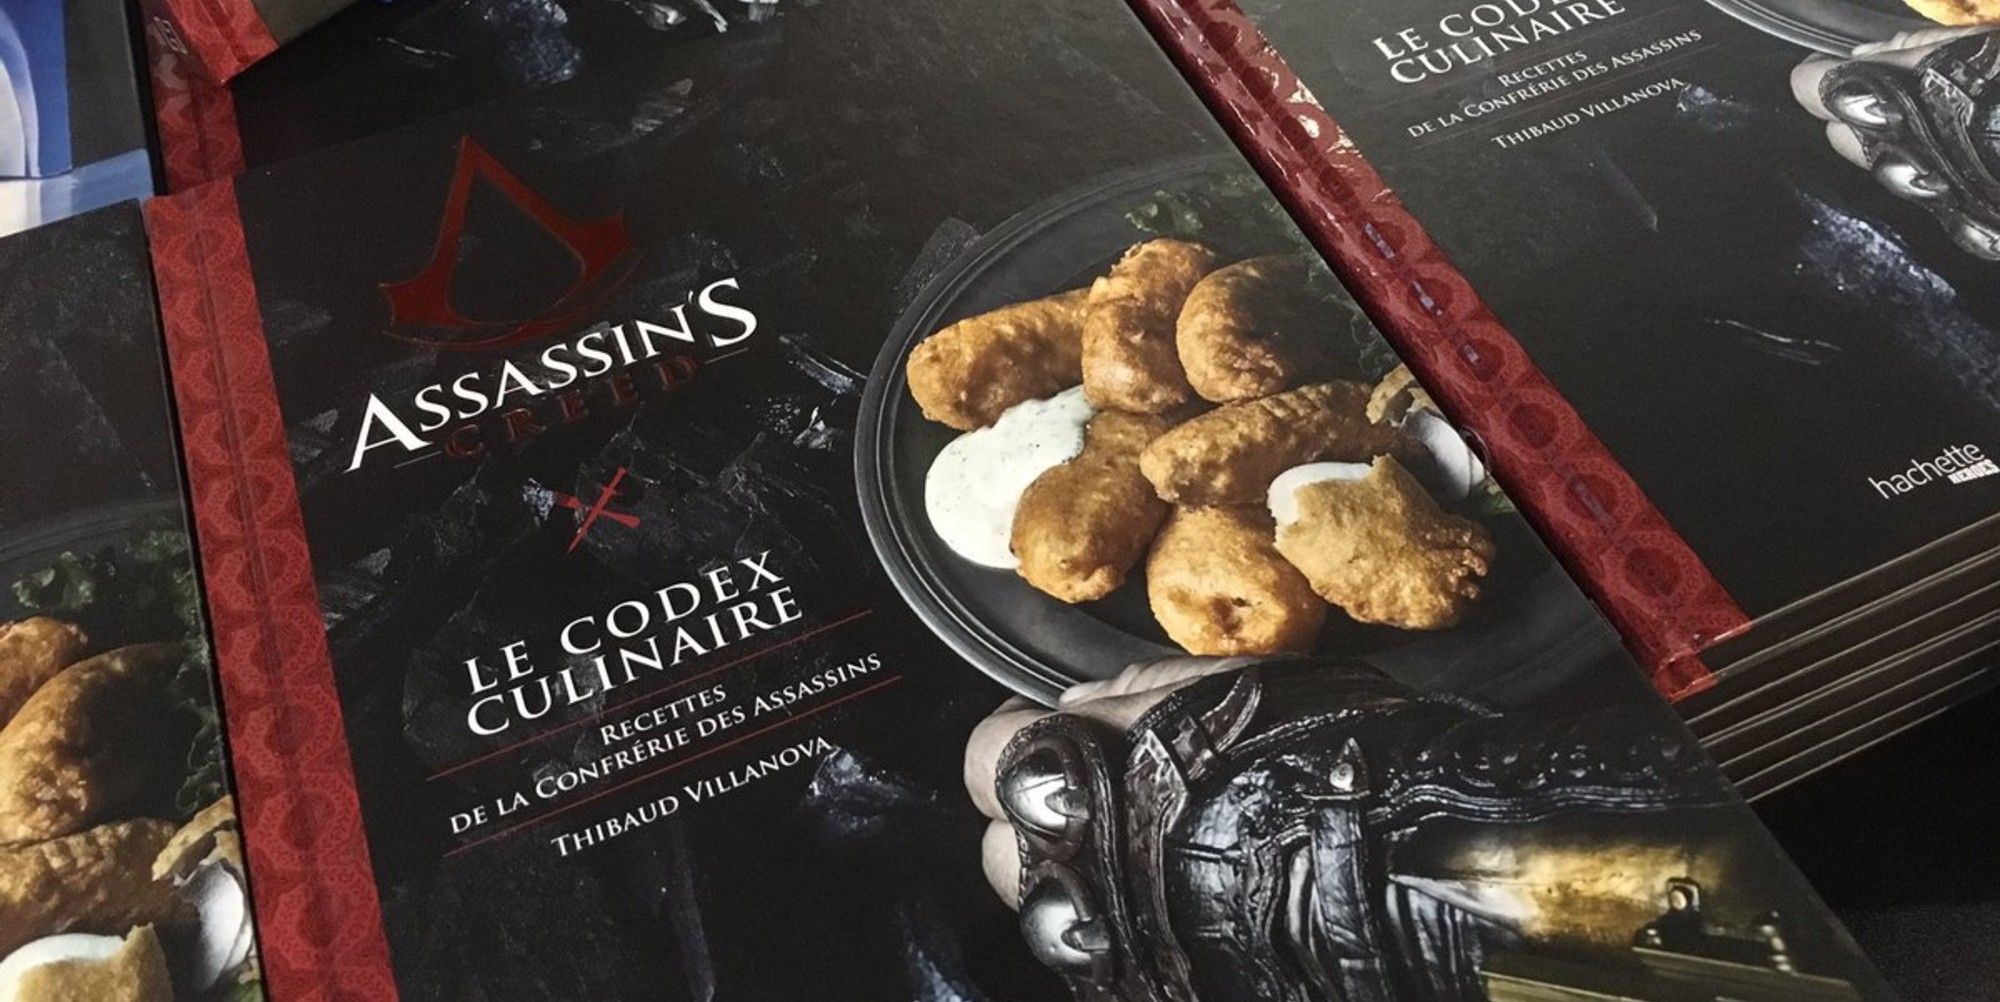 Assassins Creed Mutfak Kodeksi (1)